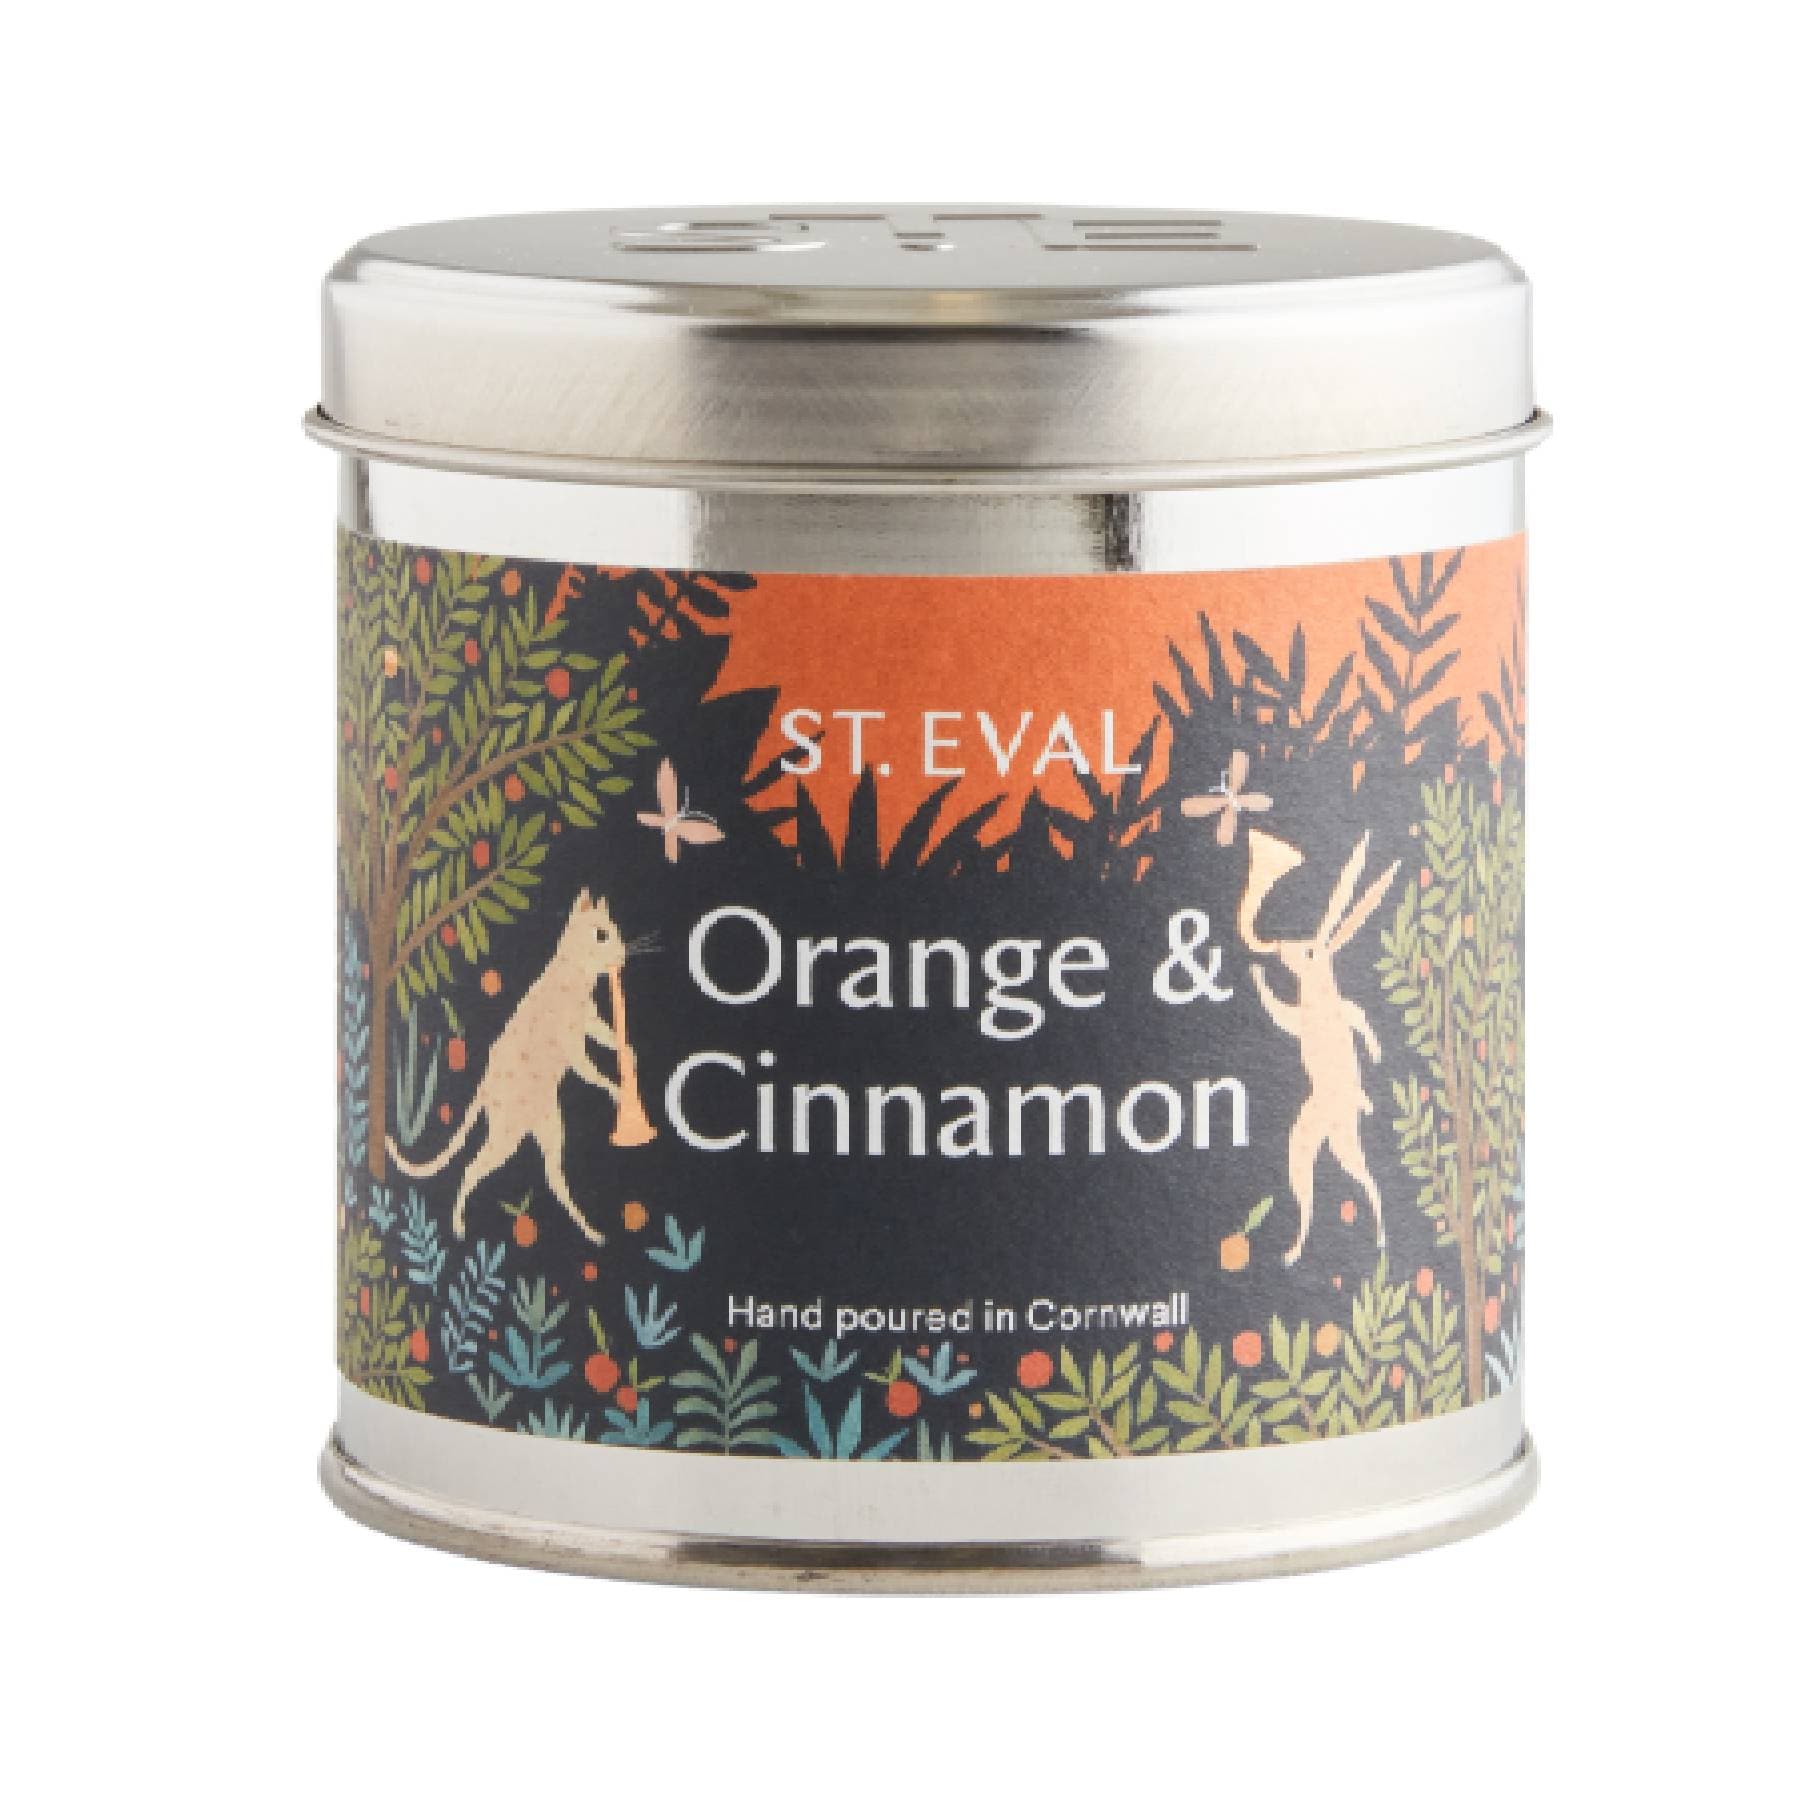 Orange & cinnamon scented tin candle